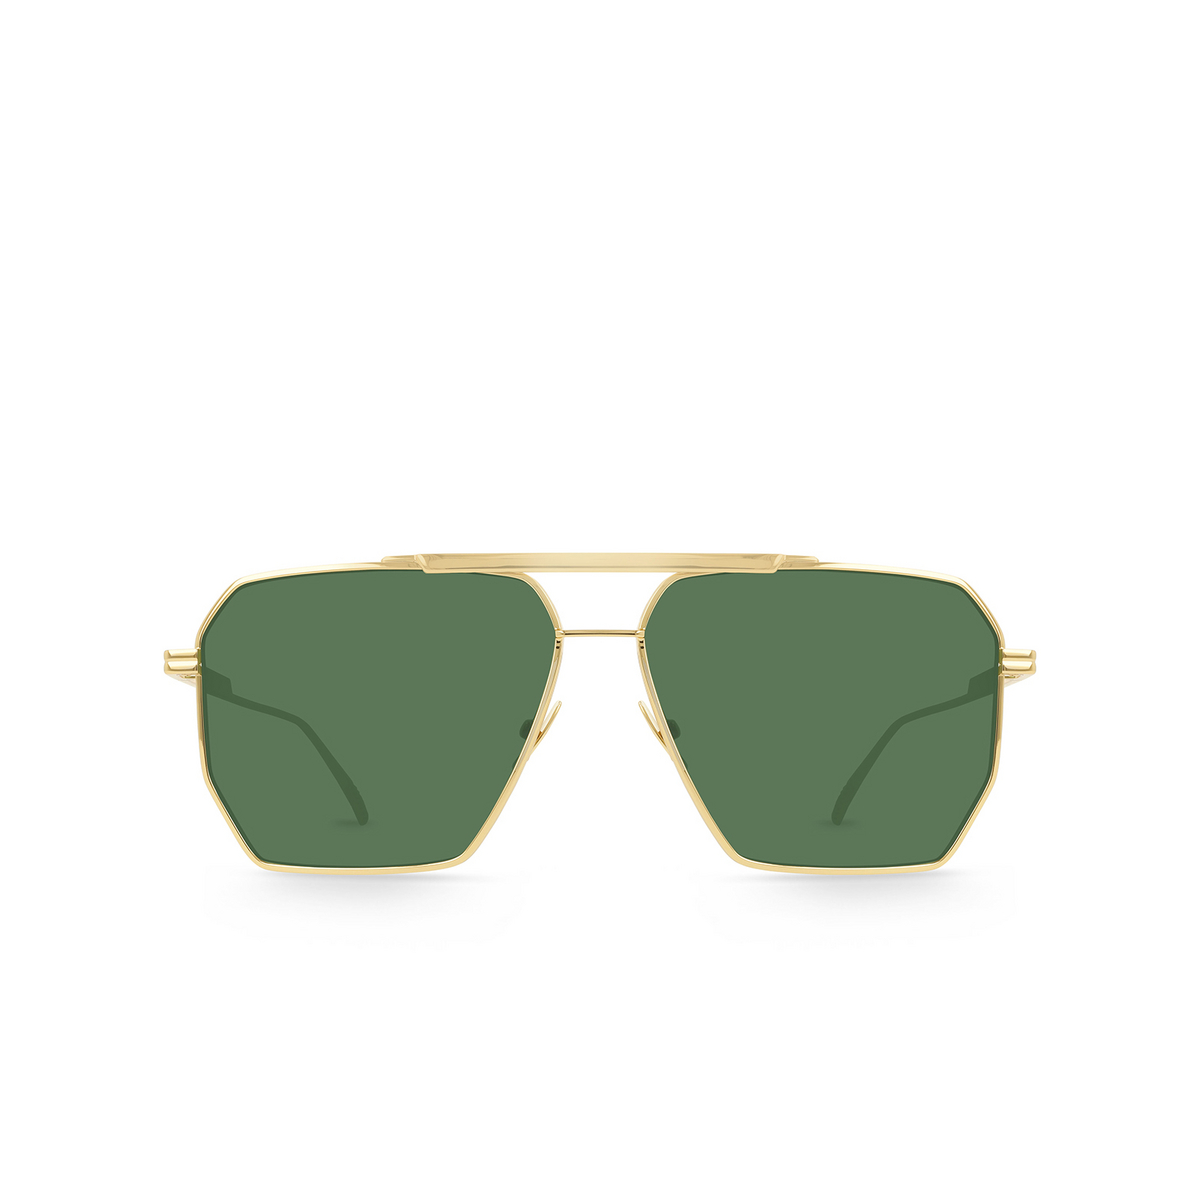 Bottega Veneta® Irregular Sunglasses: BV1012S color Gold 004 - front view.